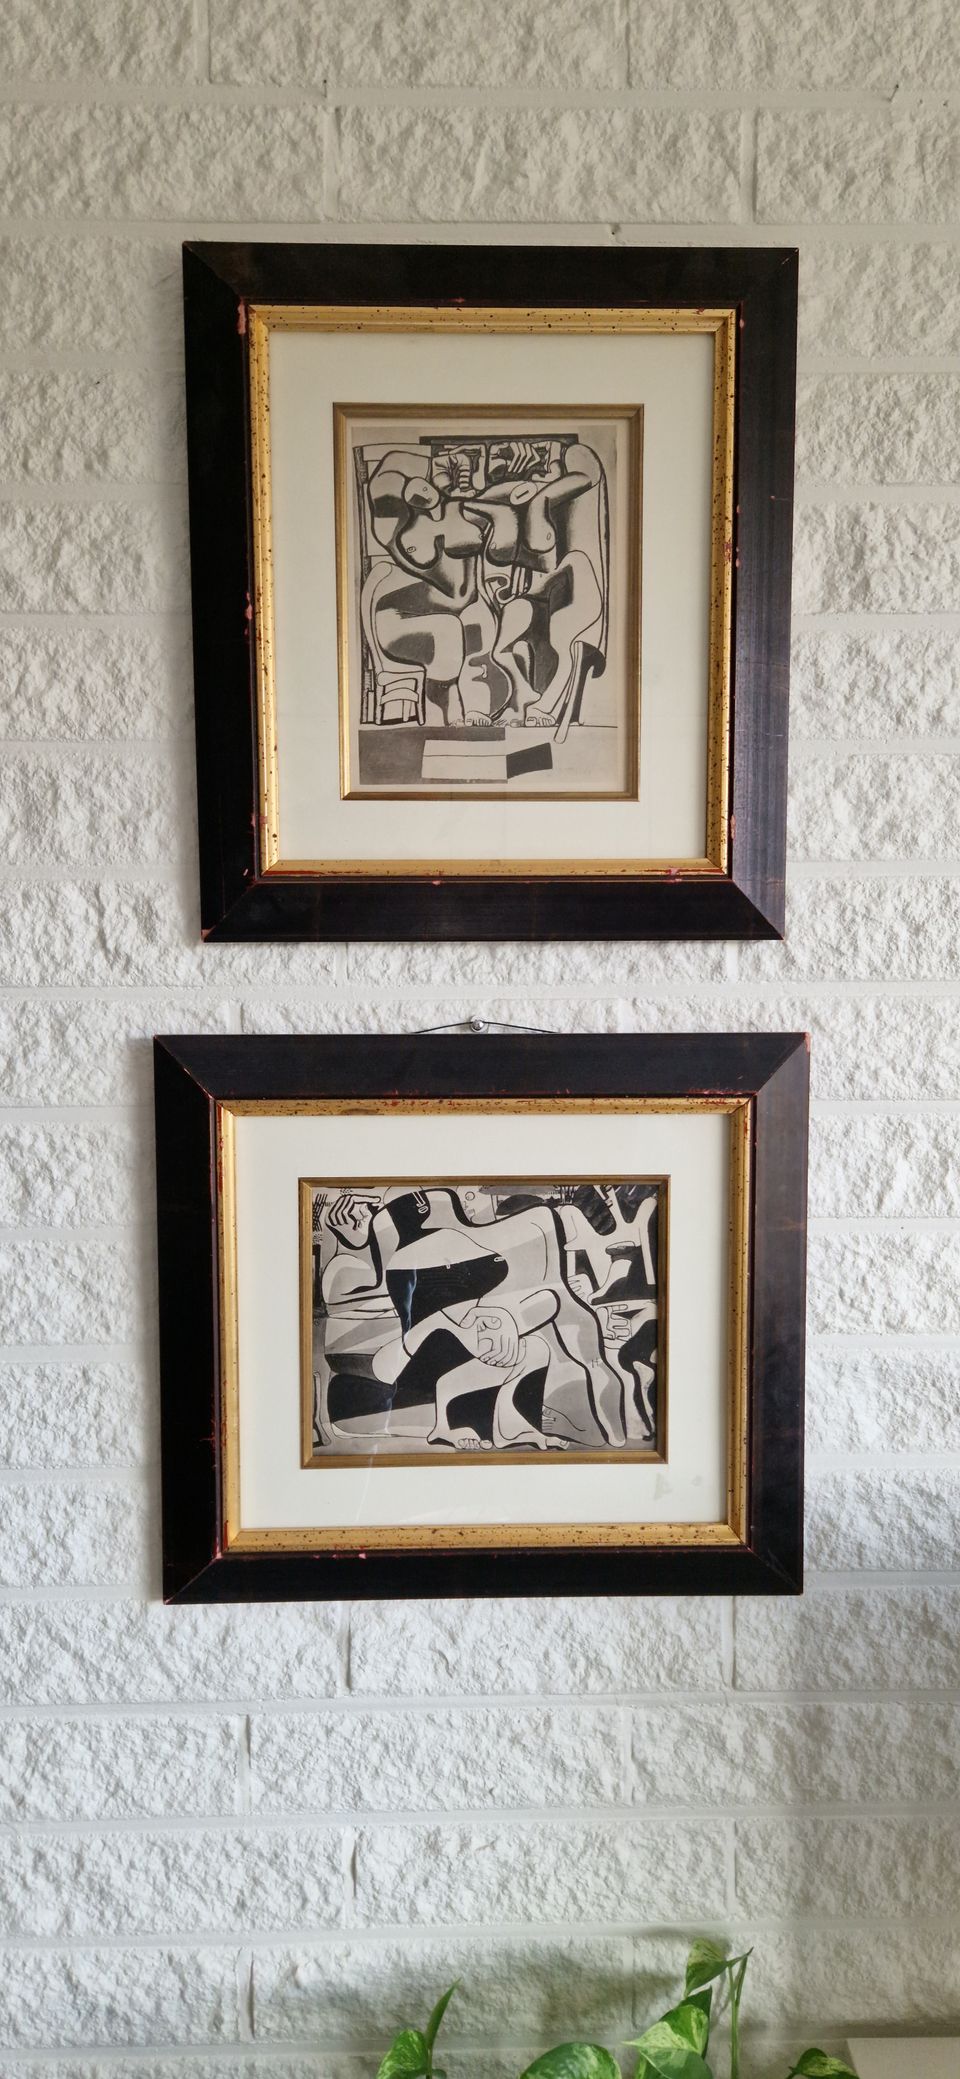 2 x Le Corbusier etchings